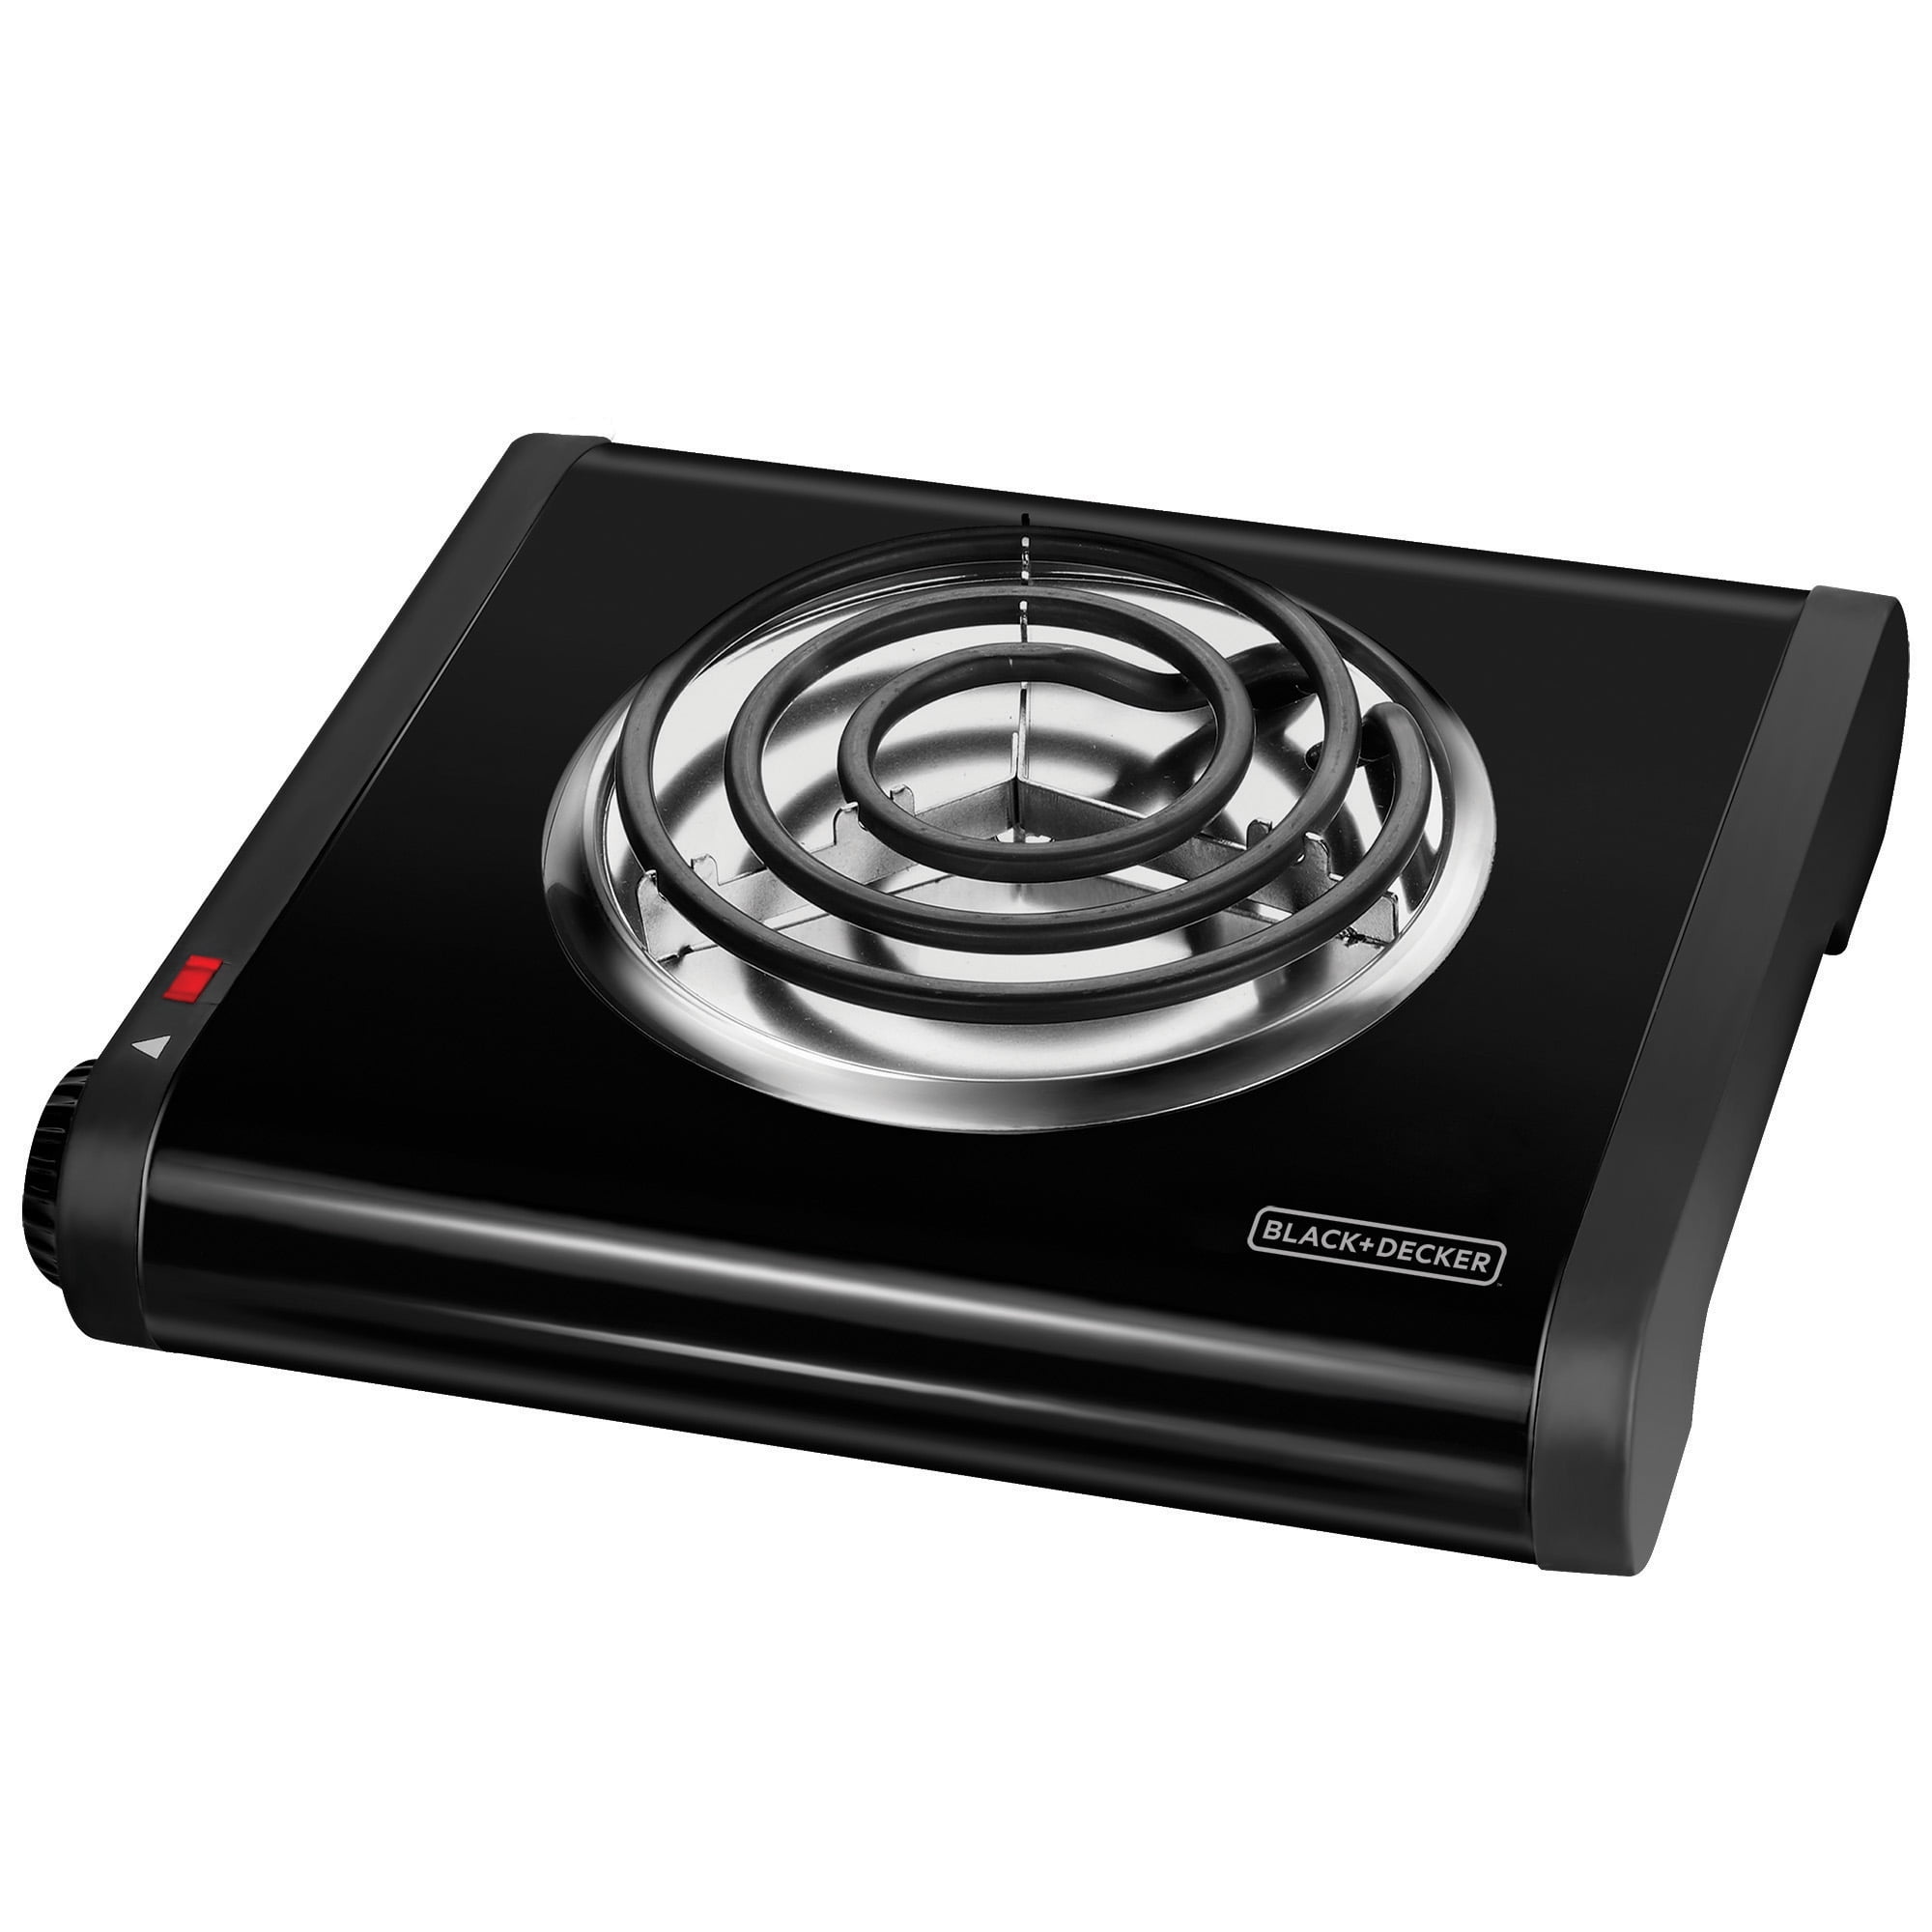 Cusimax Ceramic Electric Hot Plate, Infrared Cooktop In Black : Target